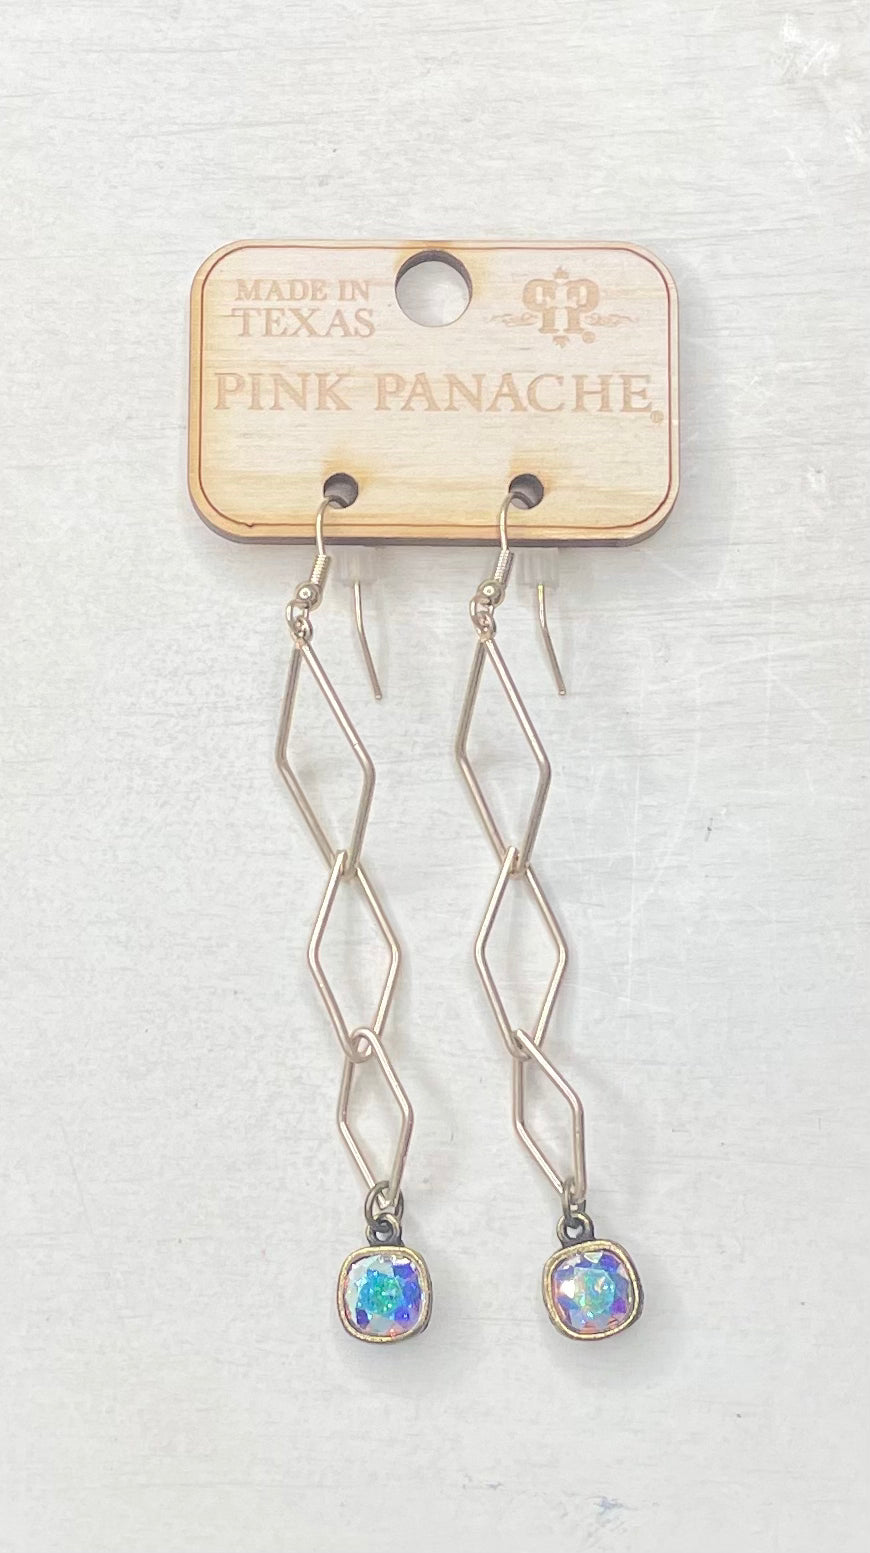 Pink Panache Earrings - 1CNC A179